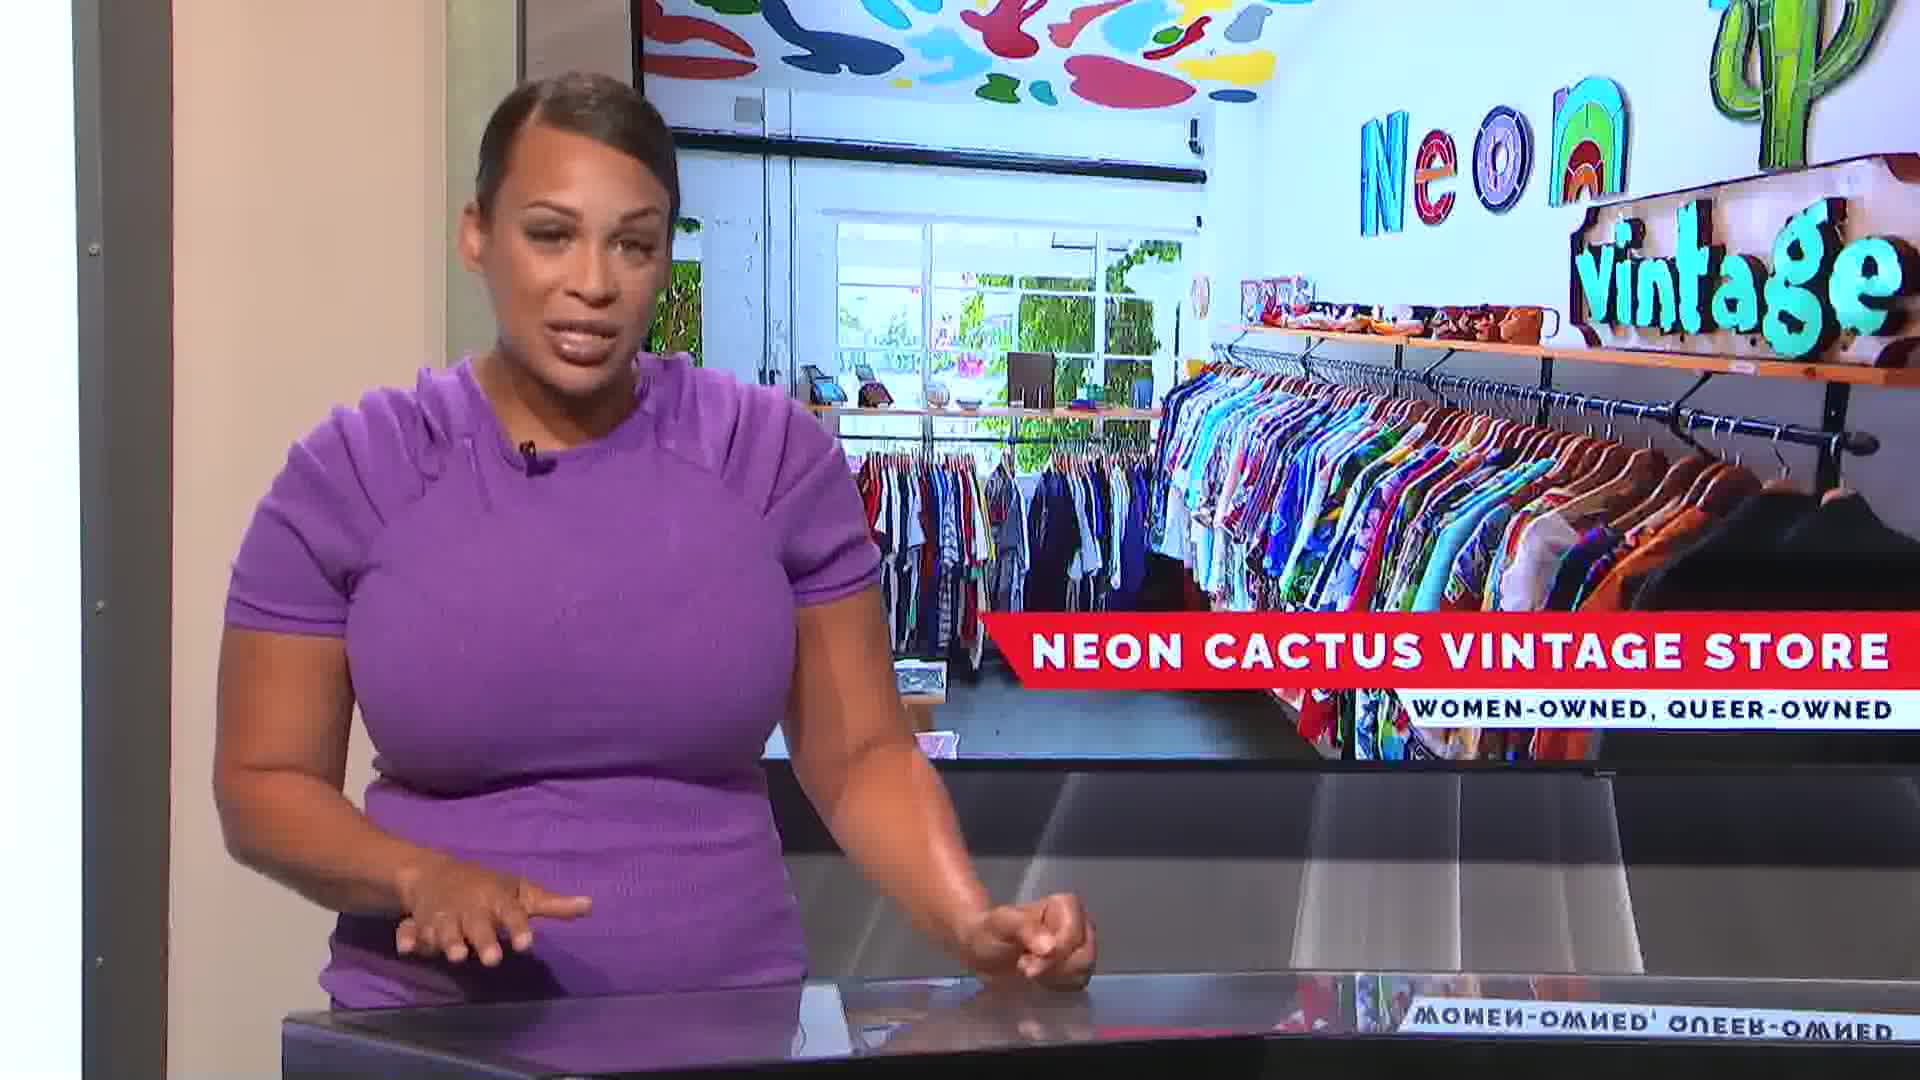 Neon Cactus Vintage